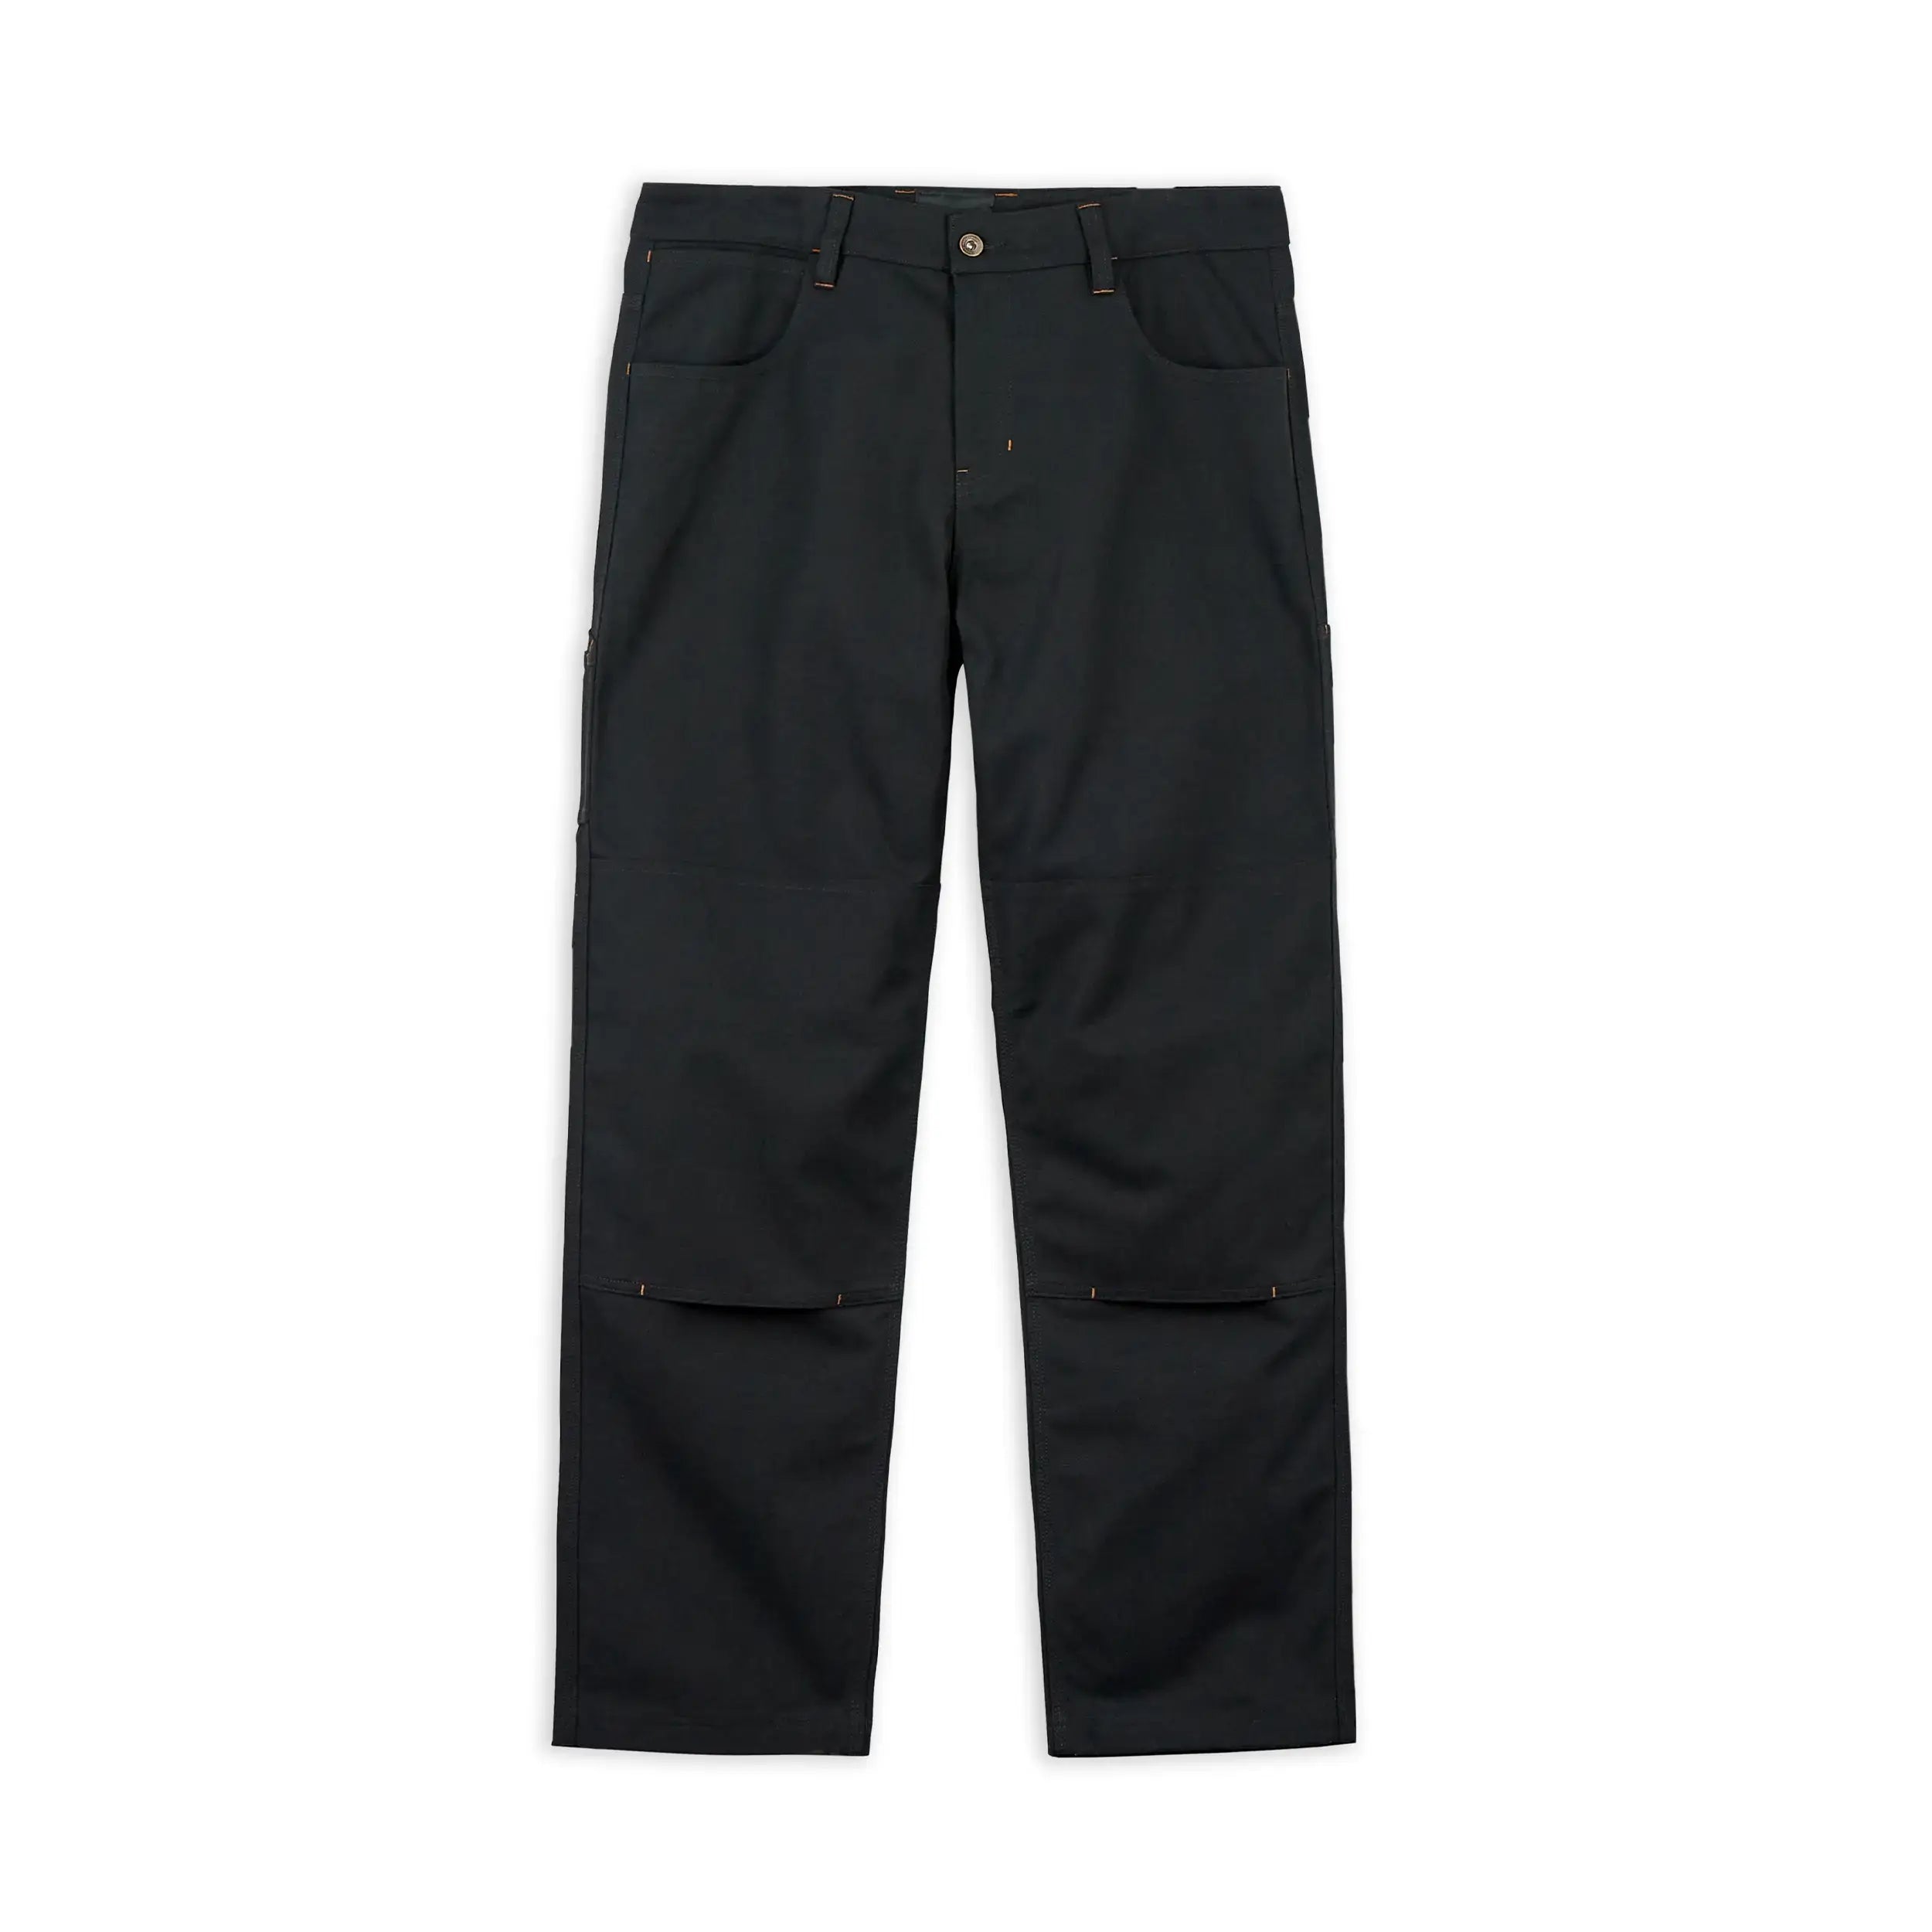 Dickies Men's Black Twill Work Pants (32 X 30) at